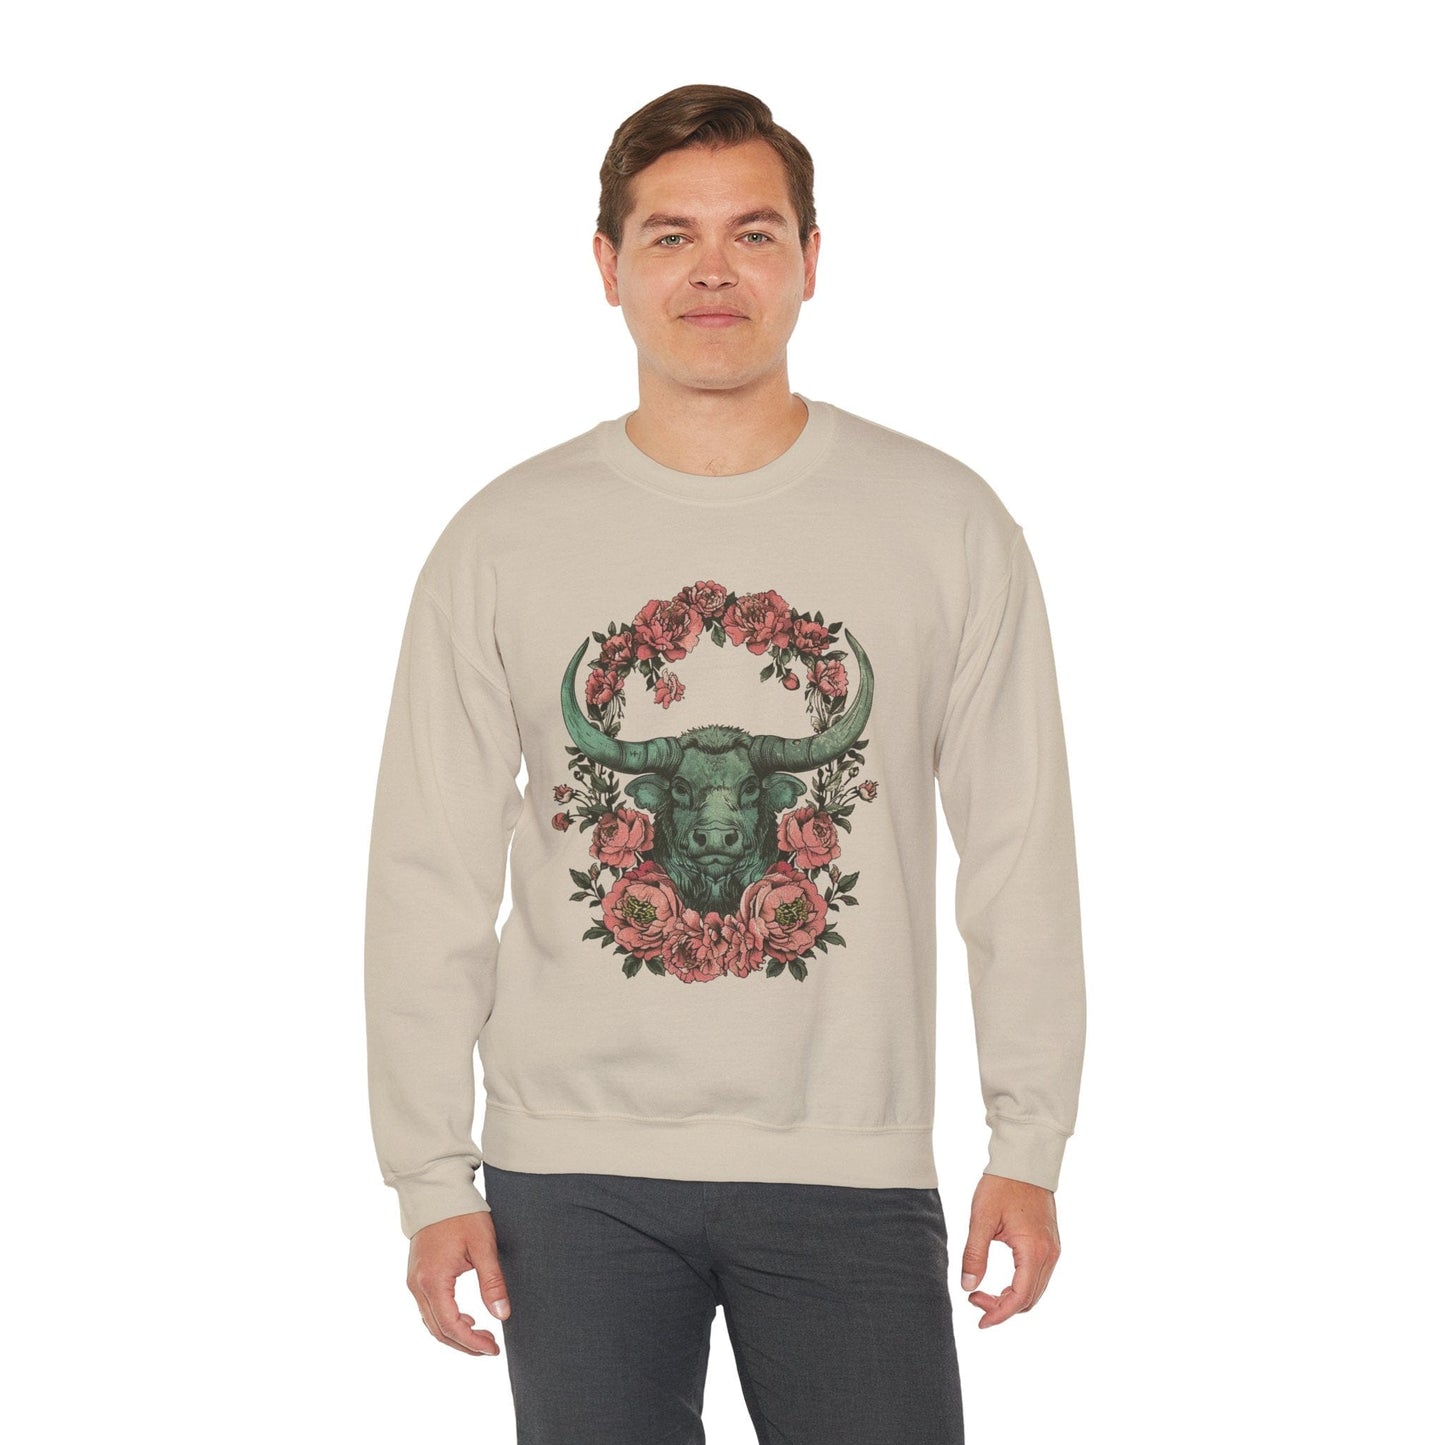 Sweatshirt Taurus Ethereal Night Sweater